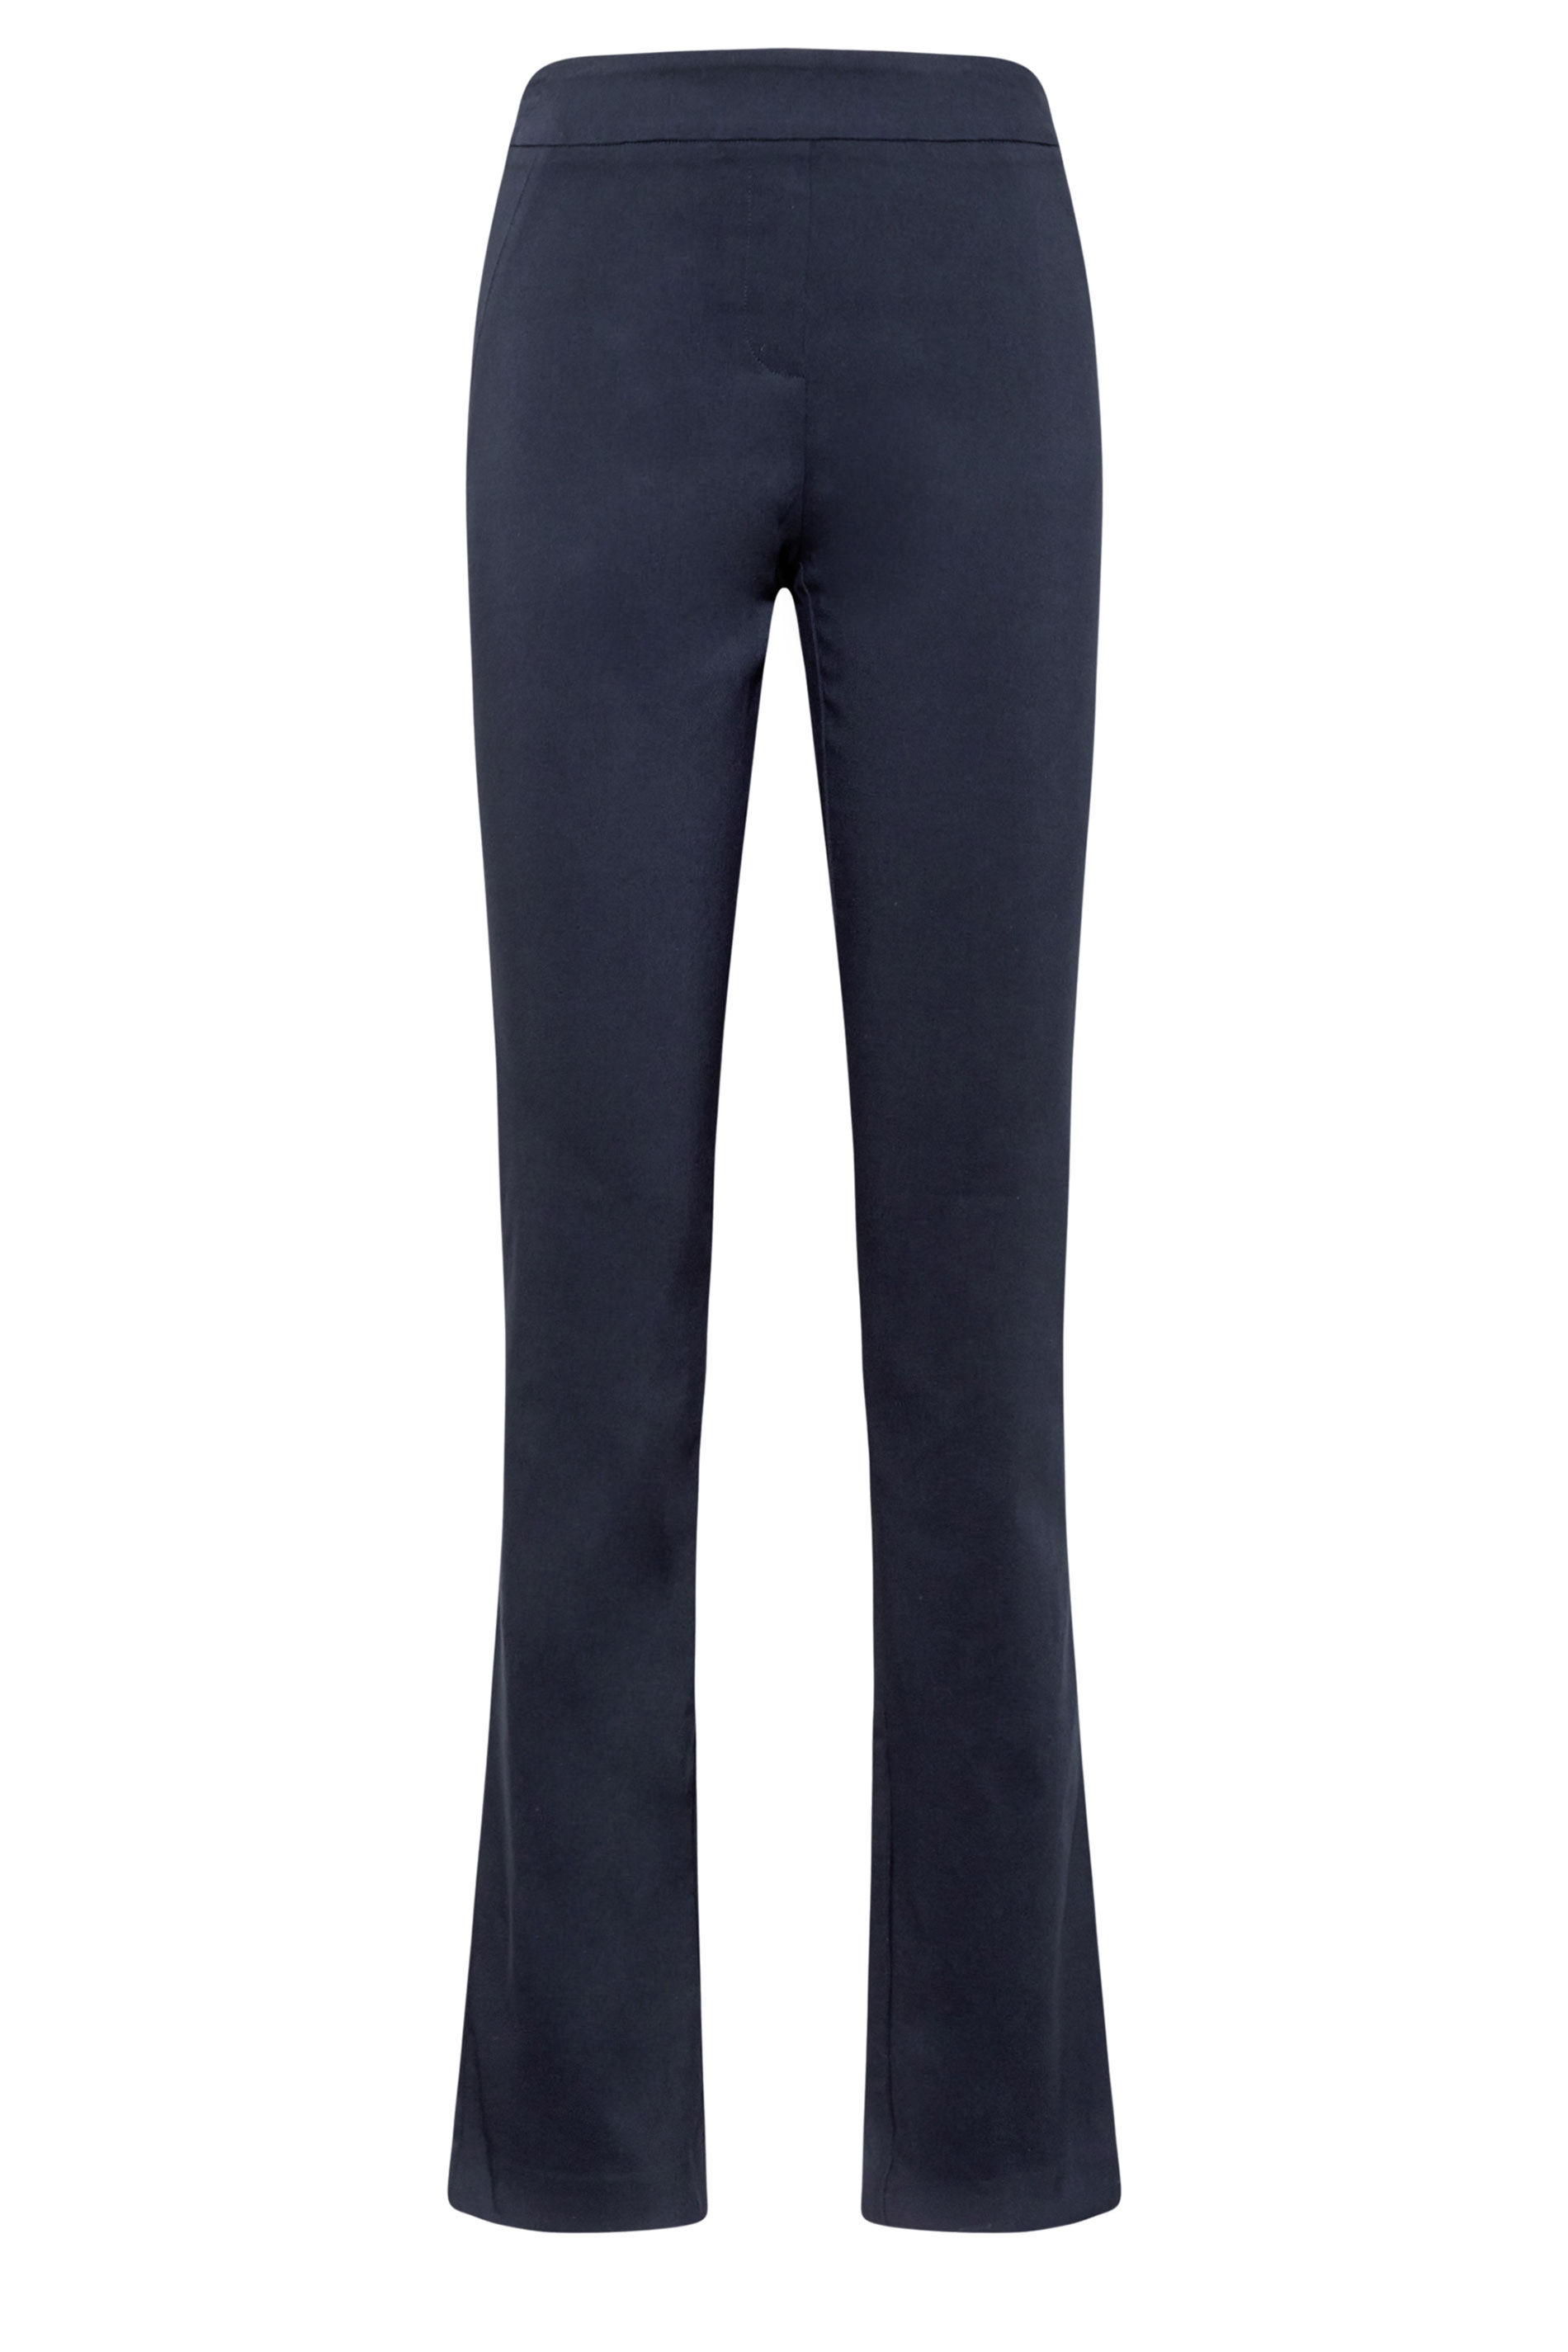 LTS Tall Women's Navy Blue Stretch Straight Leg Trousers | Long Tall Sally